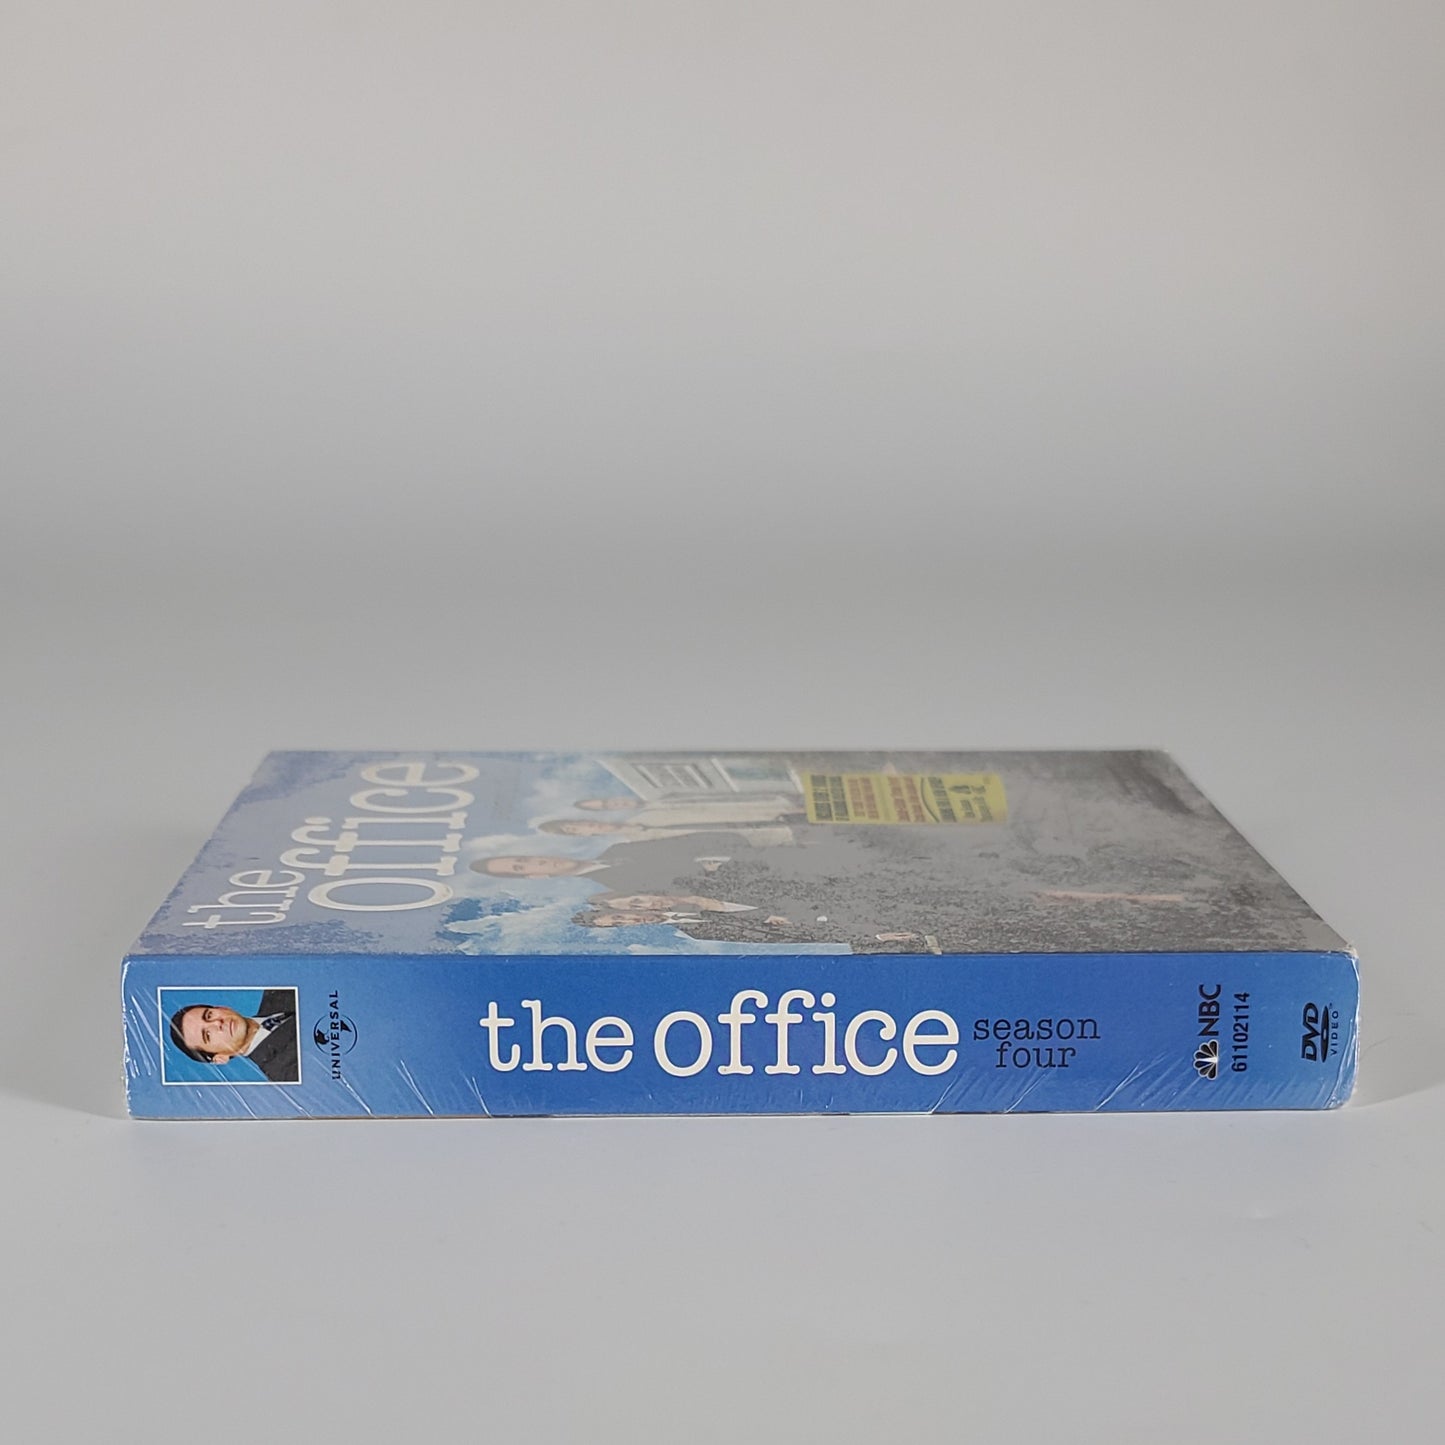 The Office Season 4 DVD Set